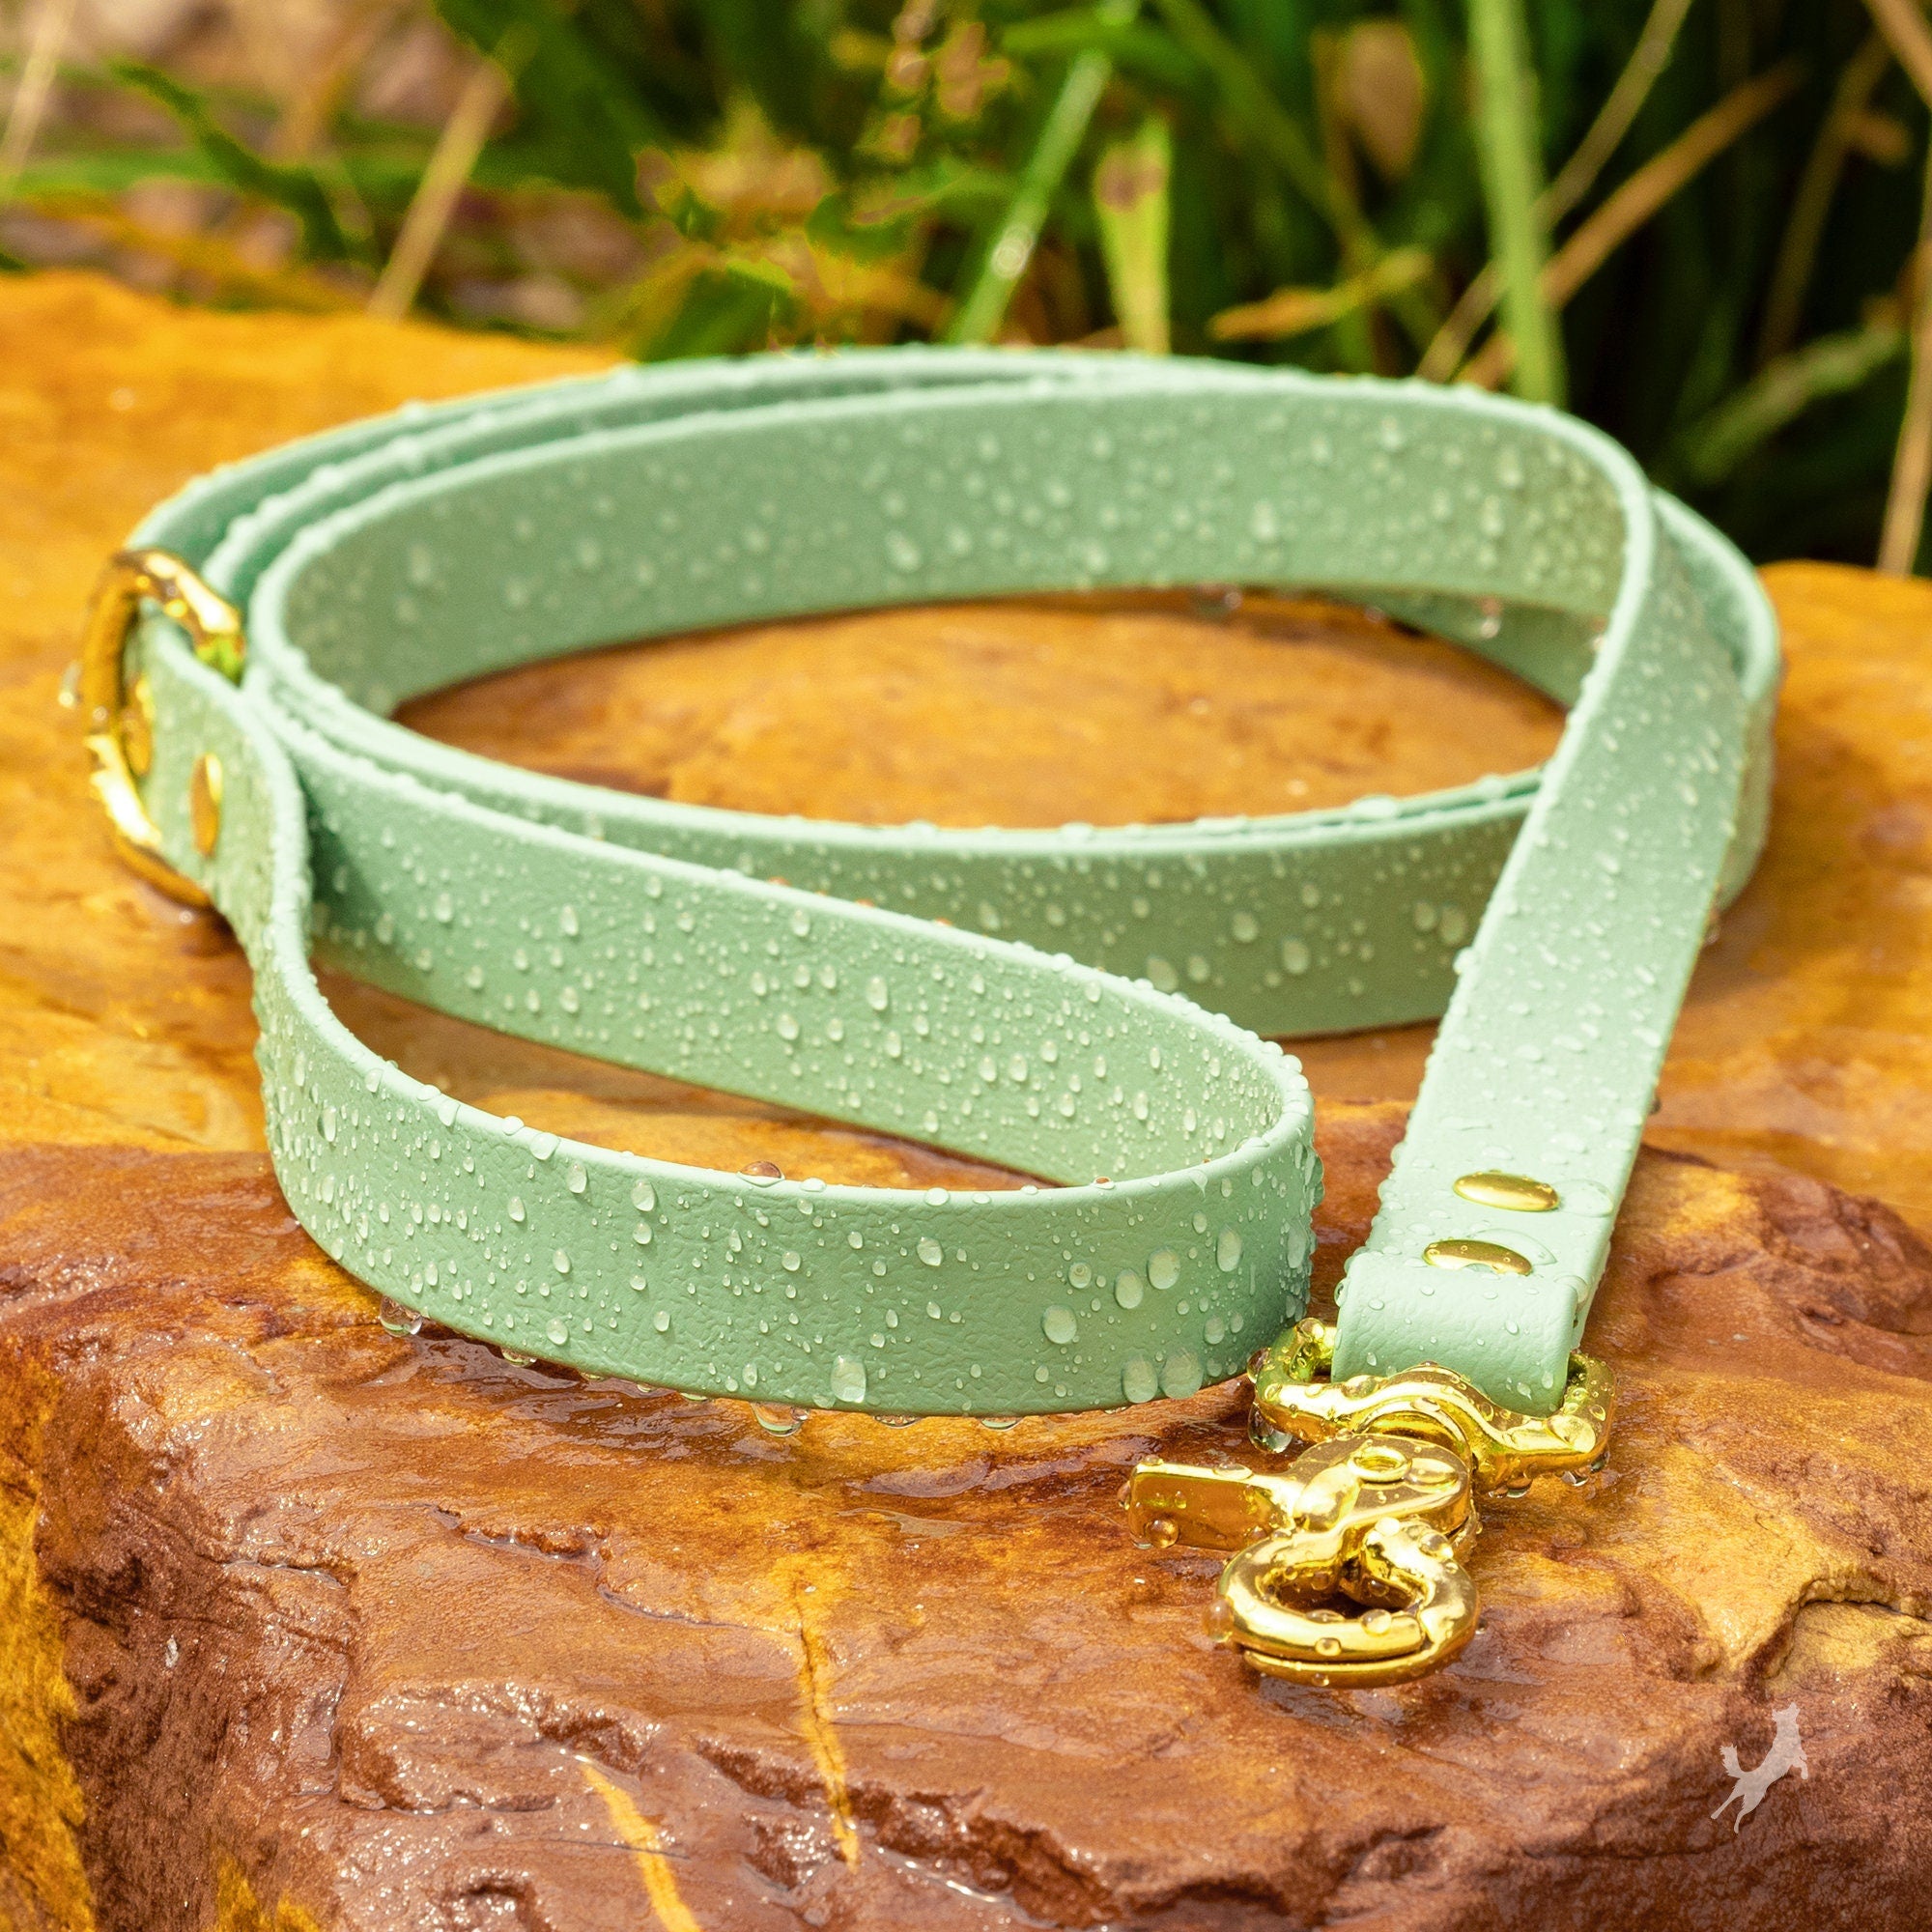 biothane waterproof dog leash in sage green with brass hardware